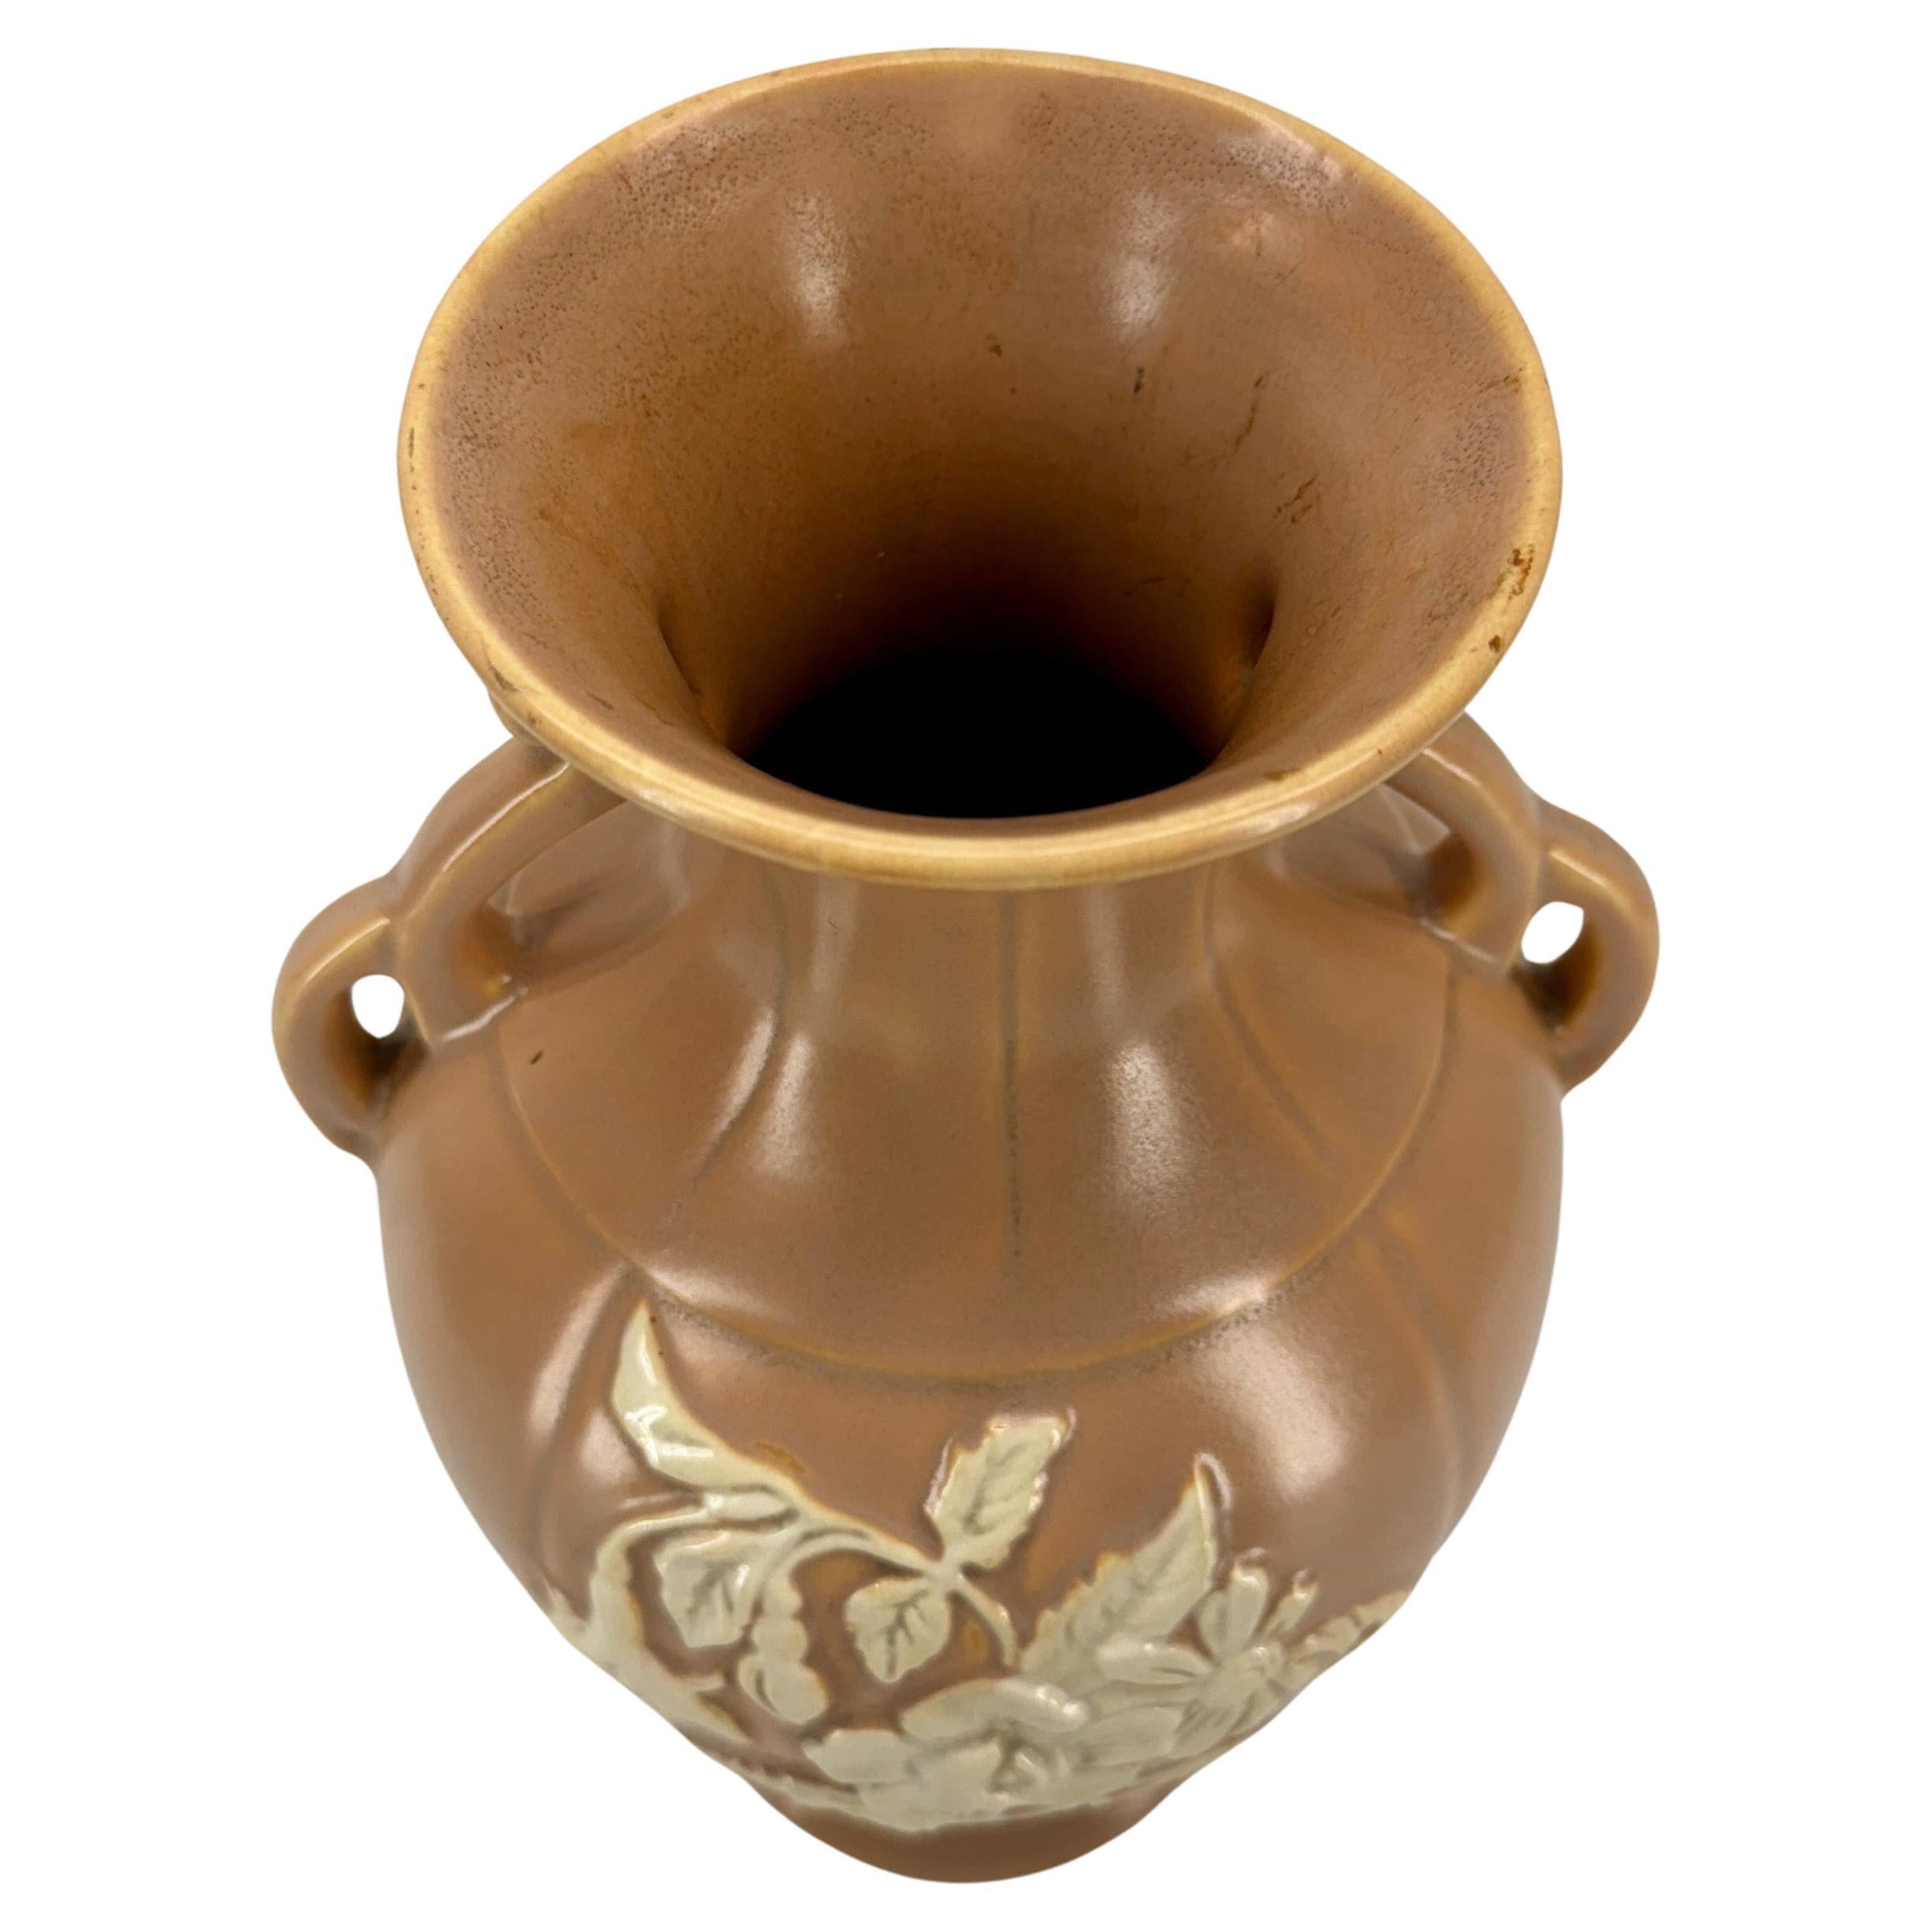 Hand-Painted Art Nouveau Deco Weller Pottery Vase with Handles  For Sale